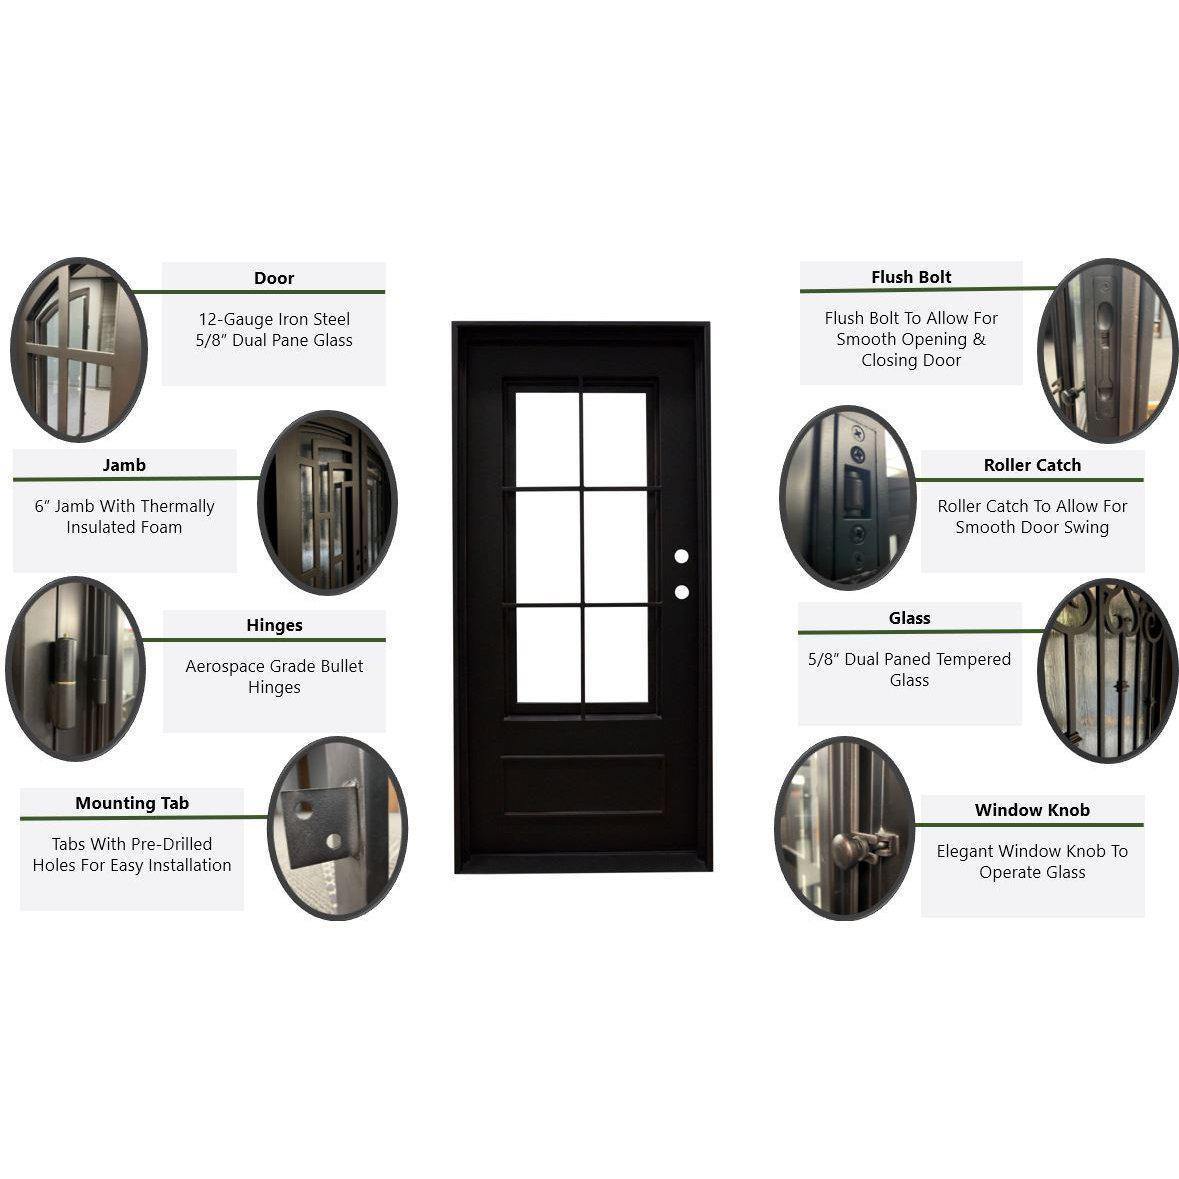 Milan Double-Wrought Iron Doors-Black Diamond Iron Doors